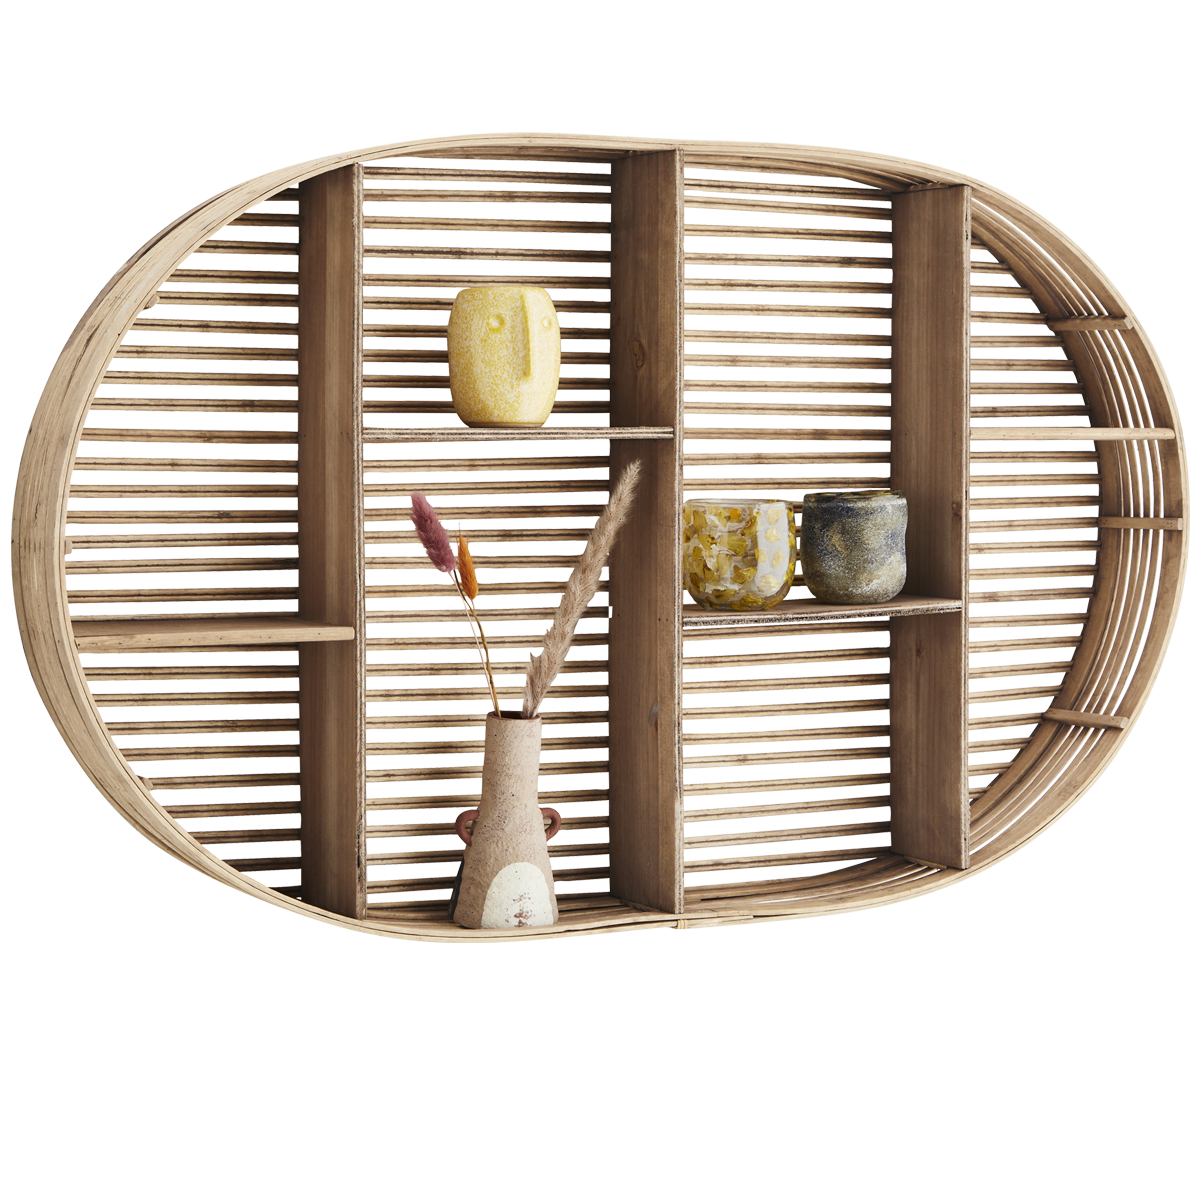 Oval bamboo shelf